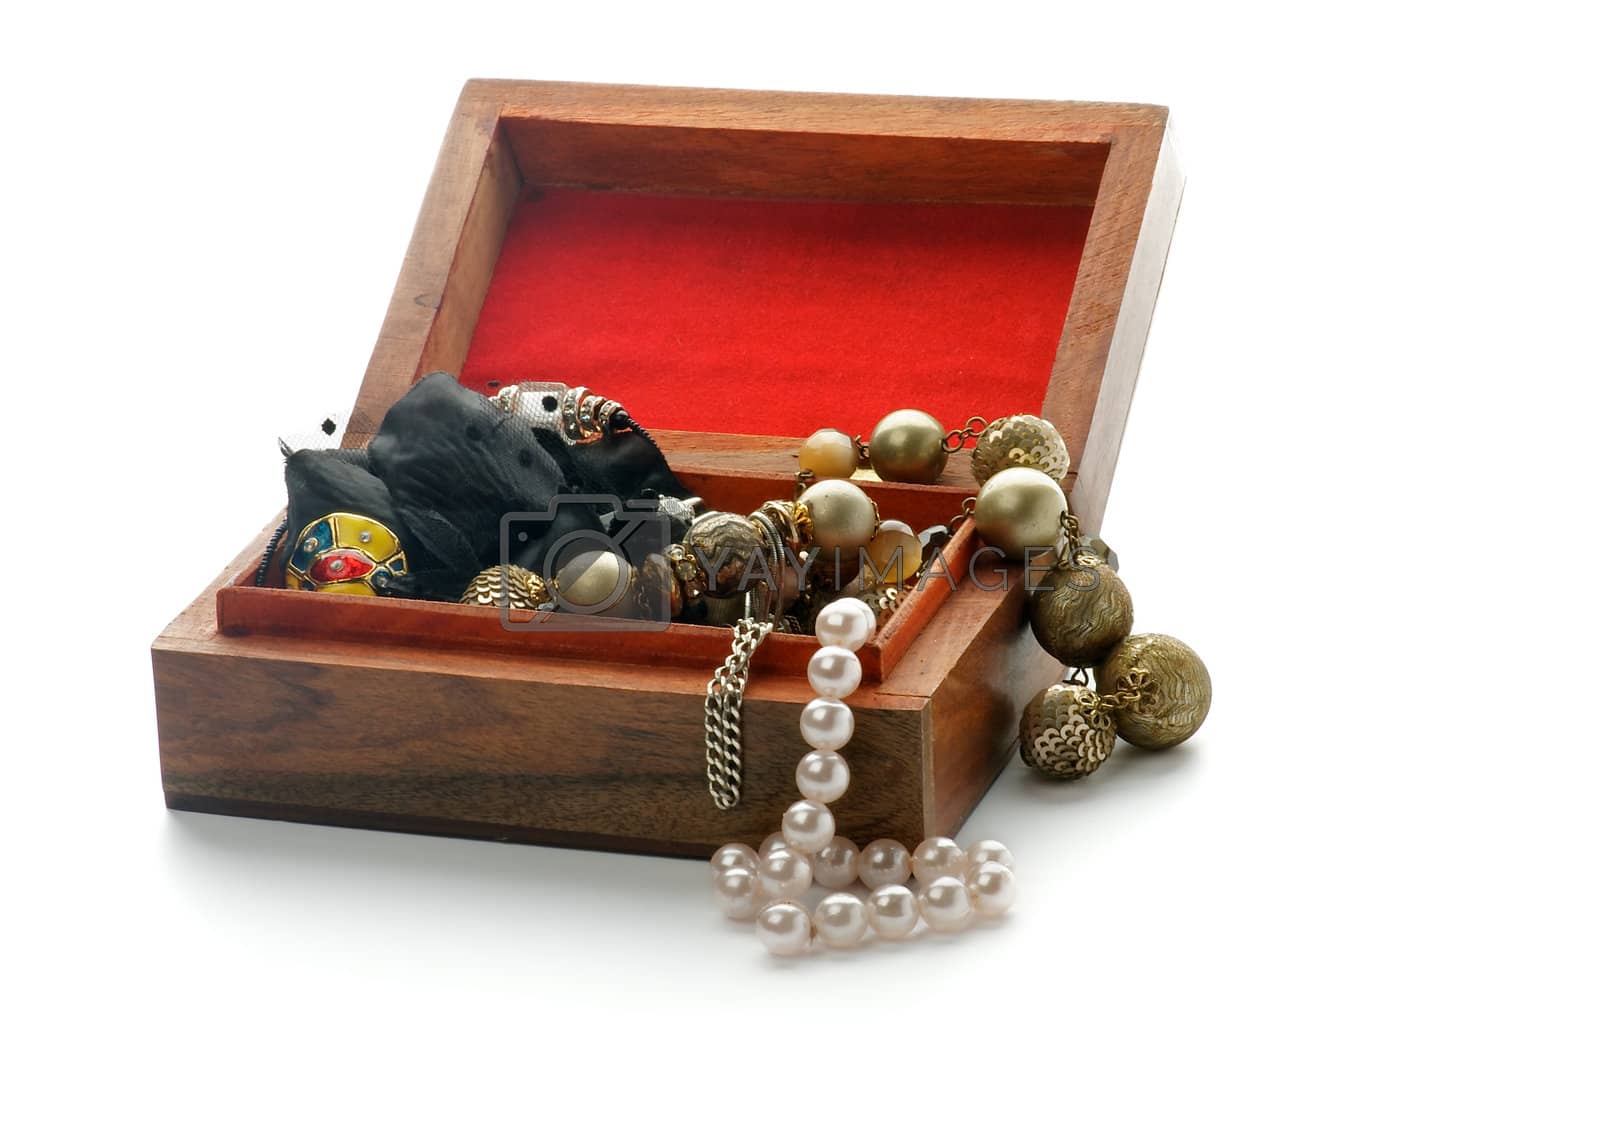 Royalty free image of Wood Jewelry Casket by zhekos